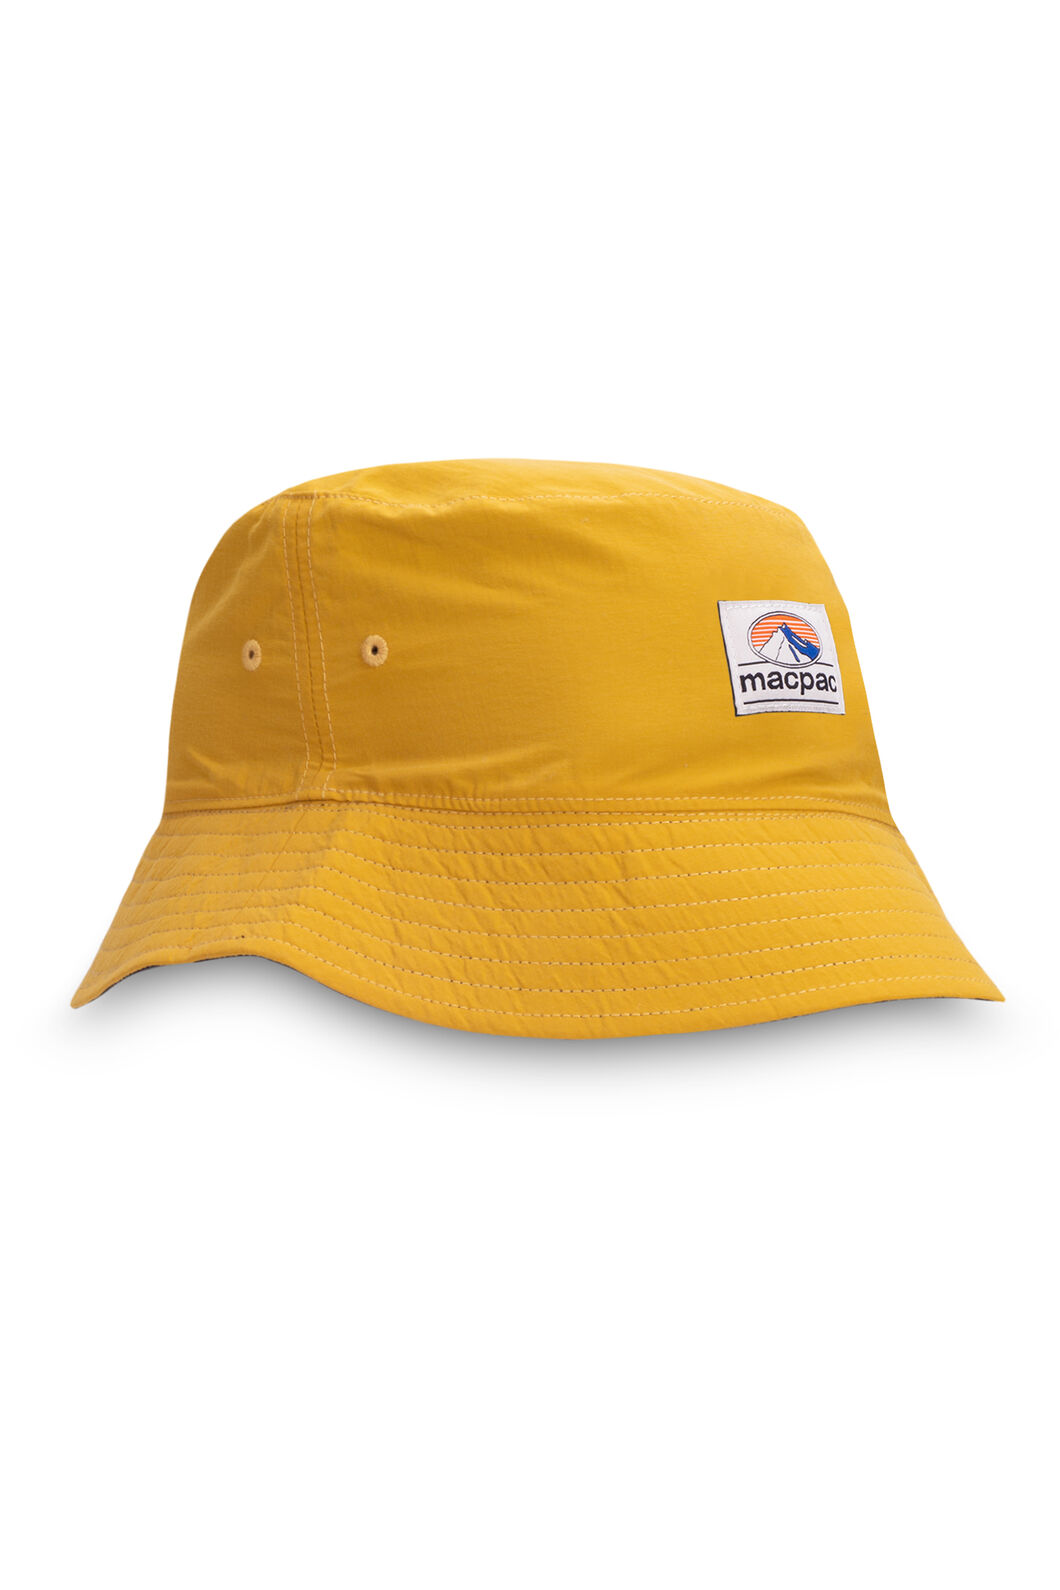 Macpac Winger Reversible Bucket Hat | Macpac